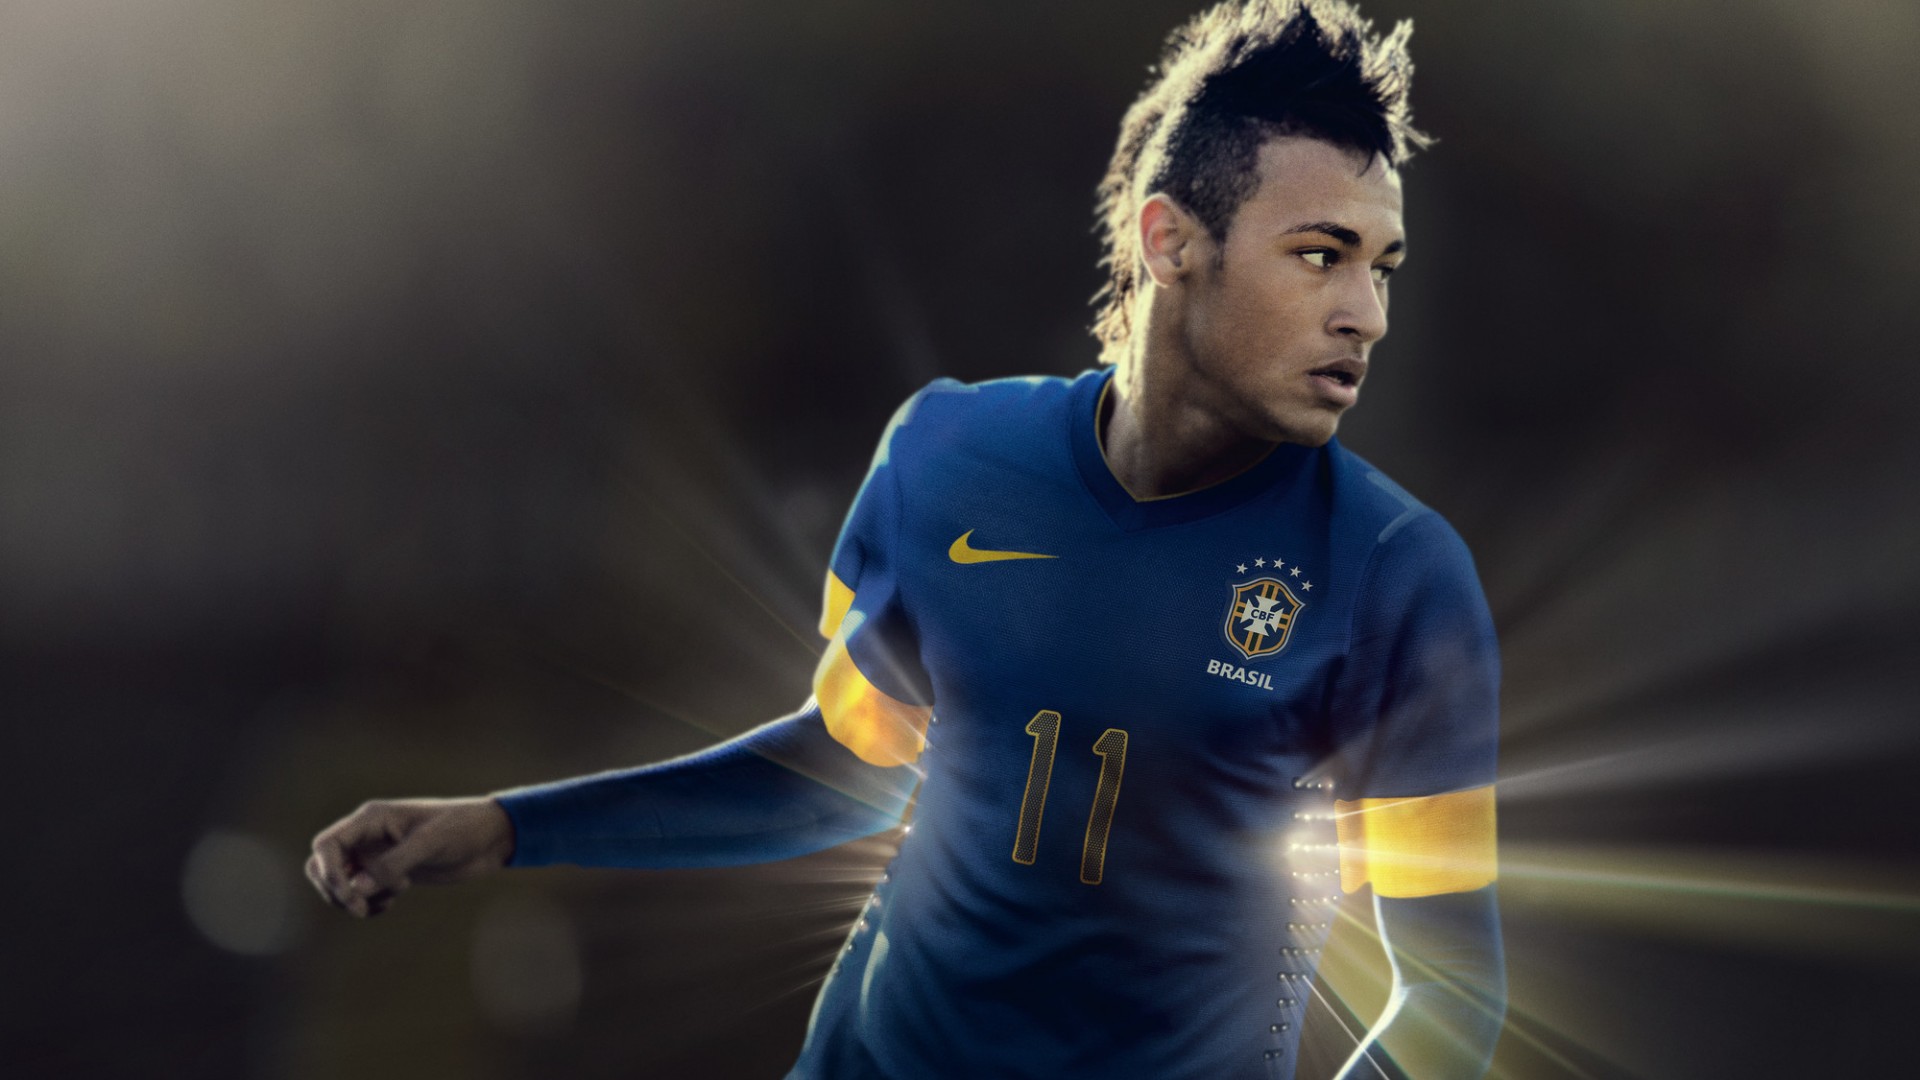 Neymar-Brazil-player-wallpapers-1080p